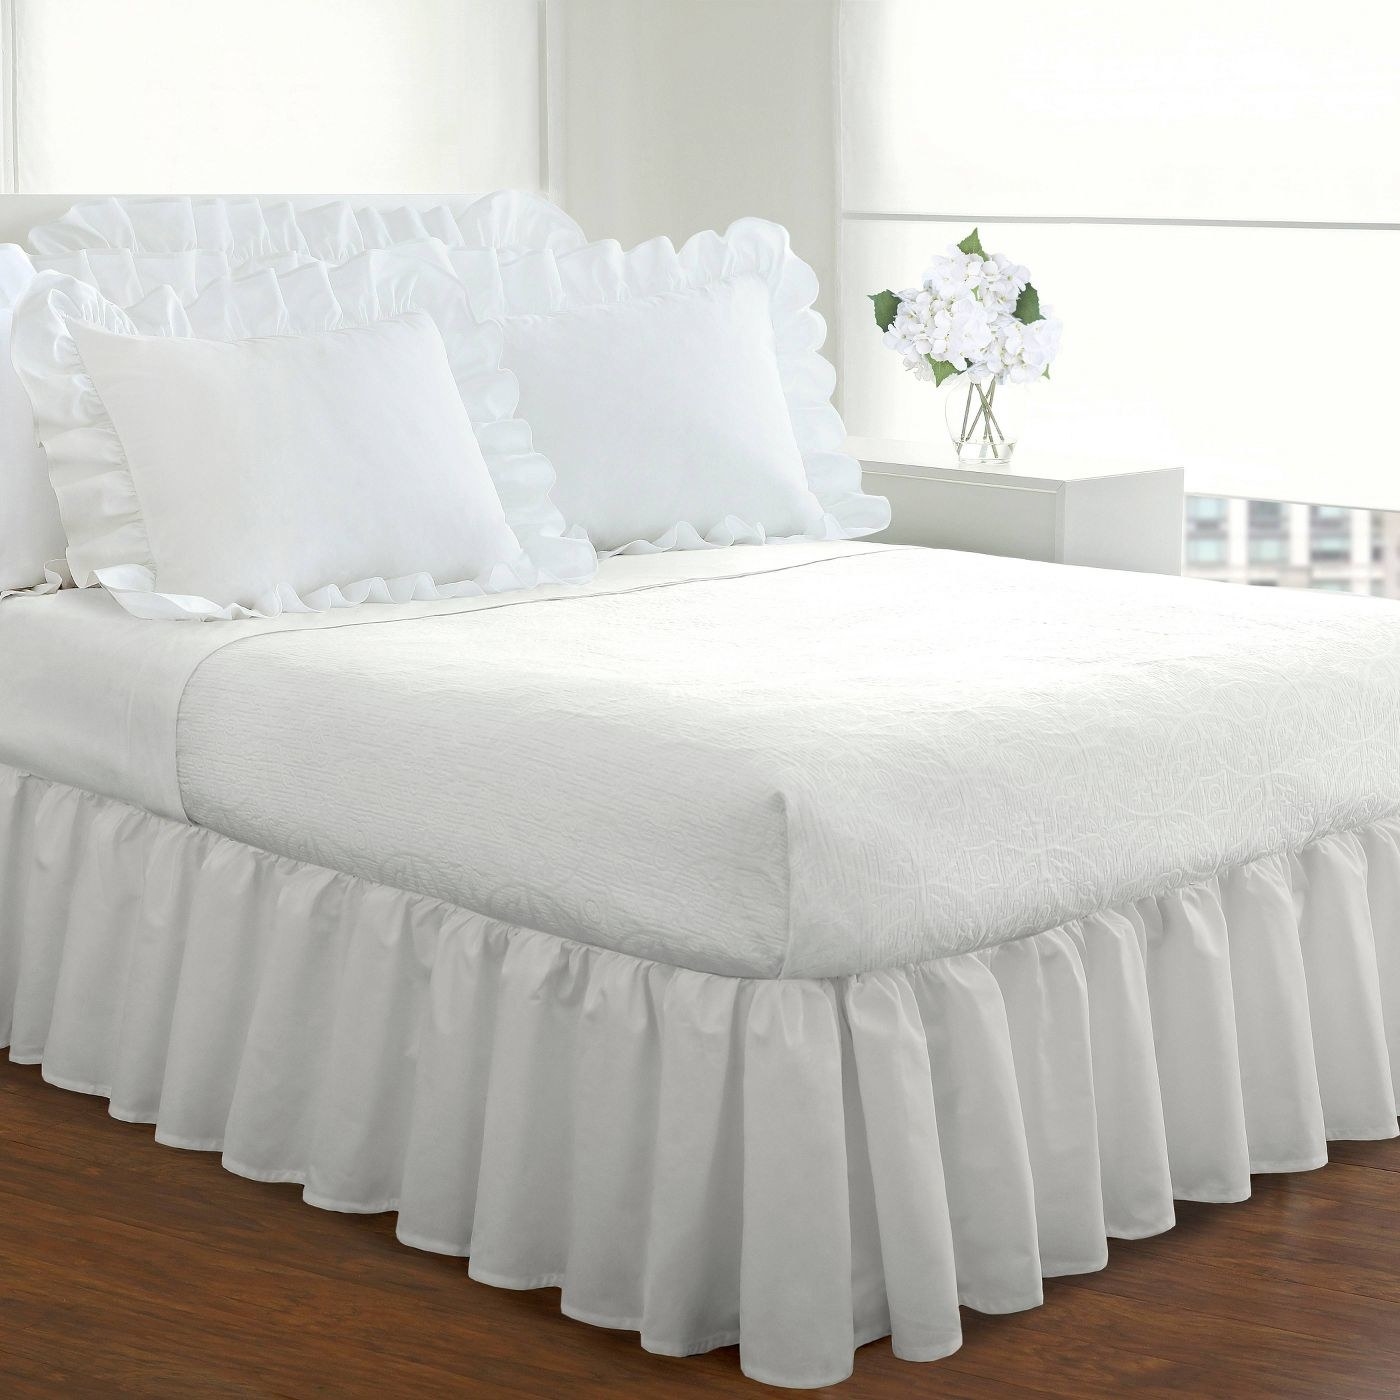 The white bed skirt